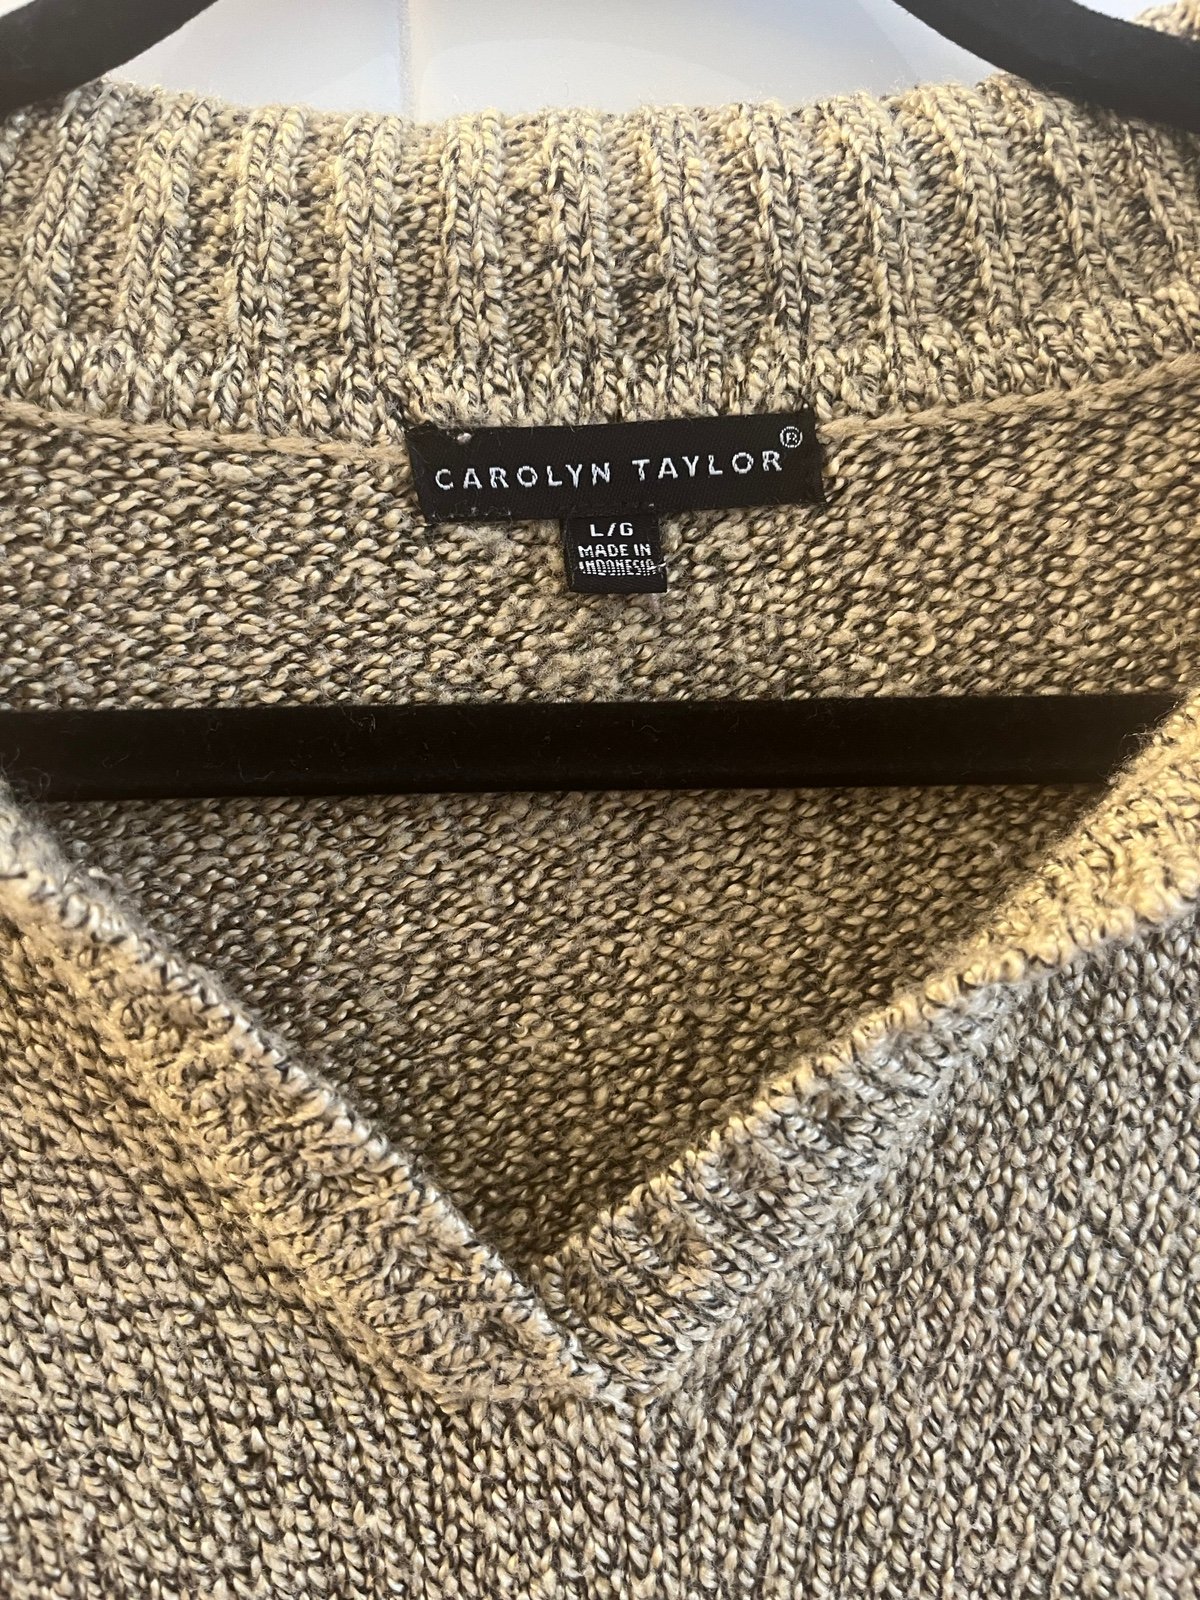 Buy Carolyn Taylor knit long Sleeve Sweatshirt Size Large j03MHTcR0 US Outlet